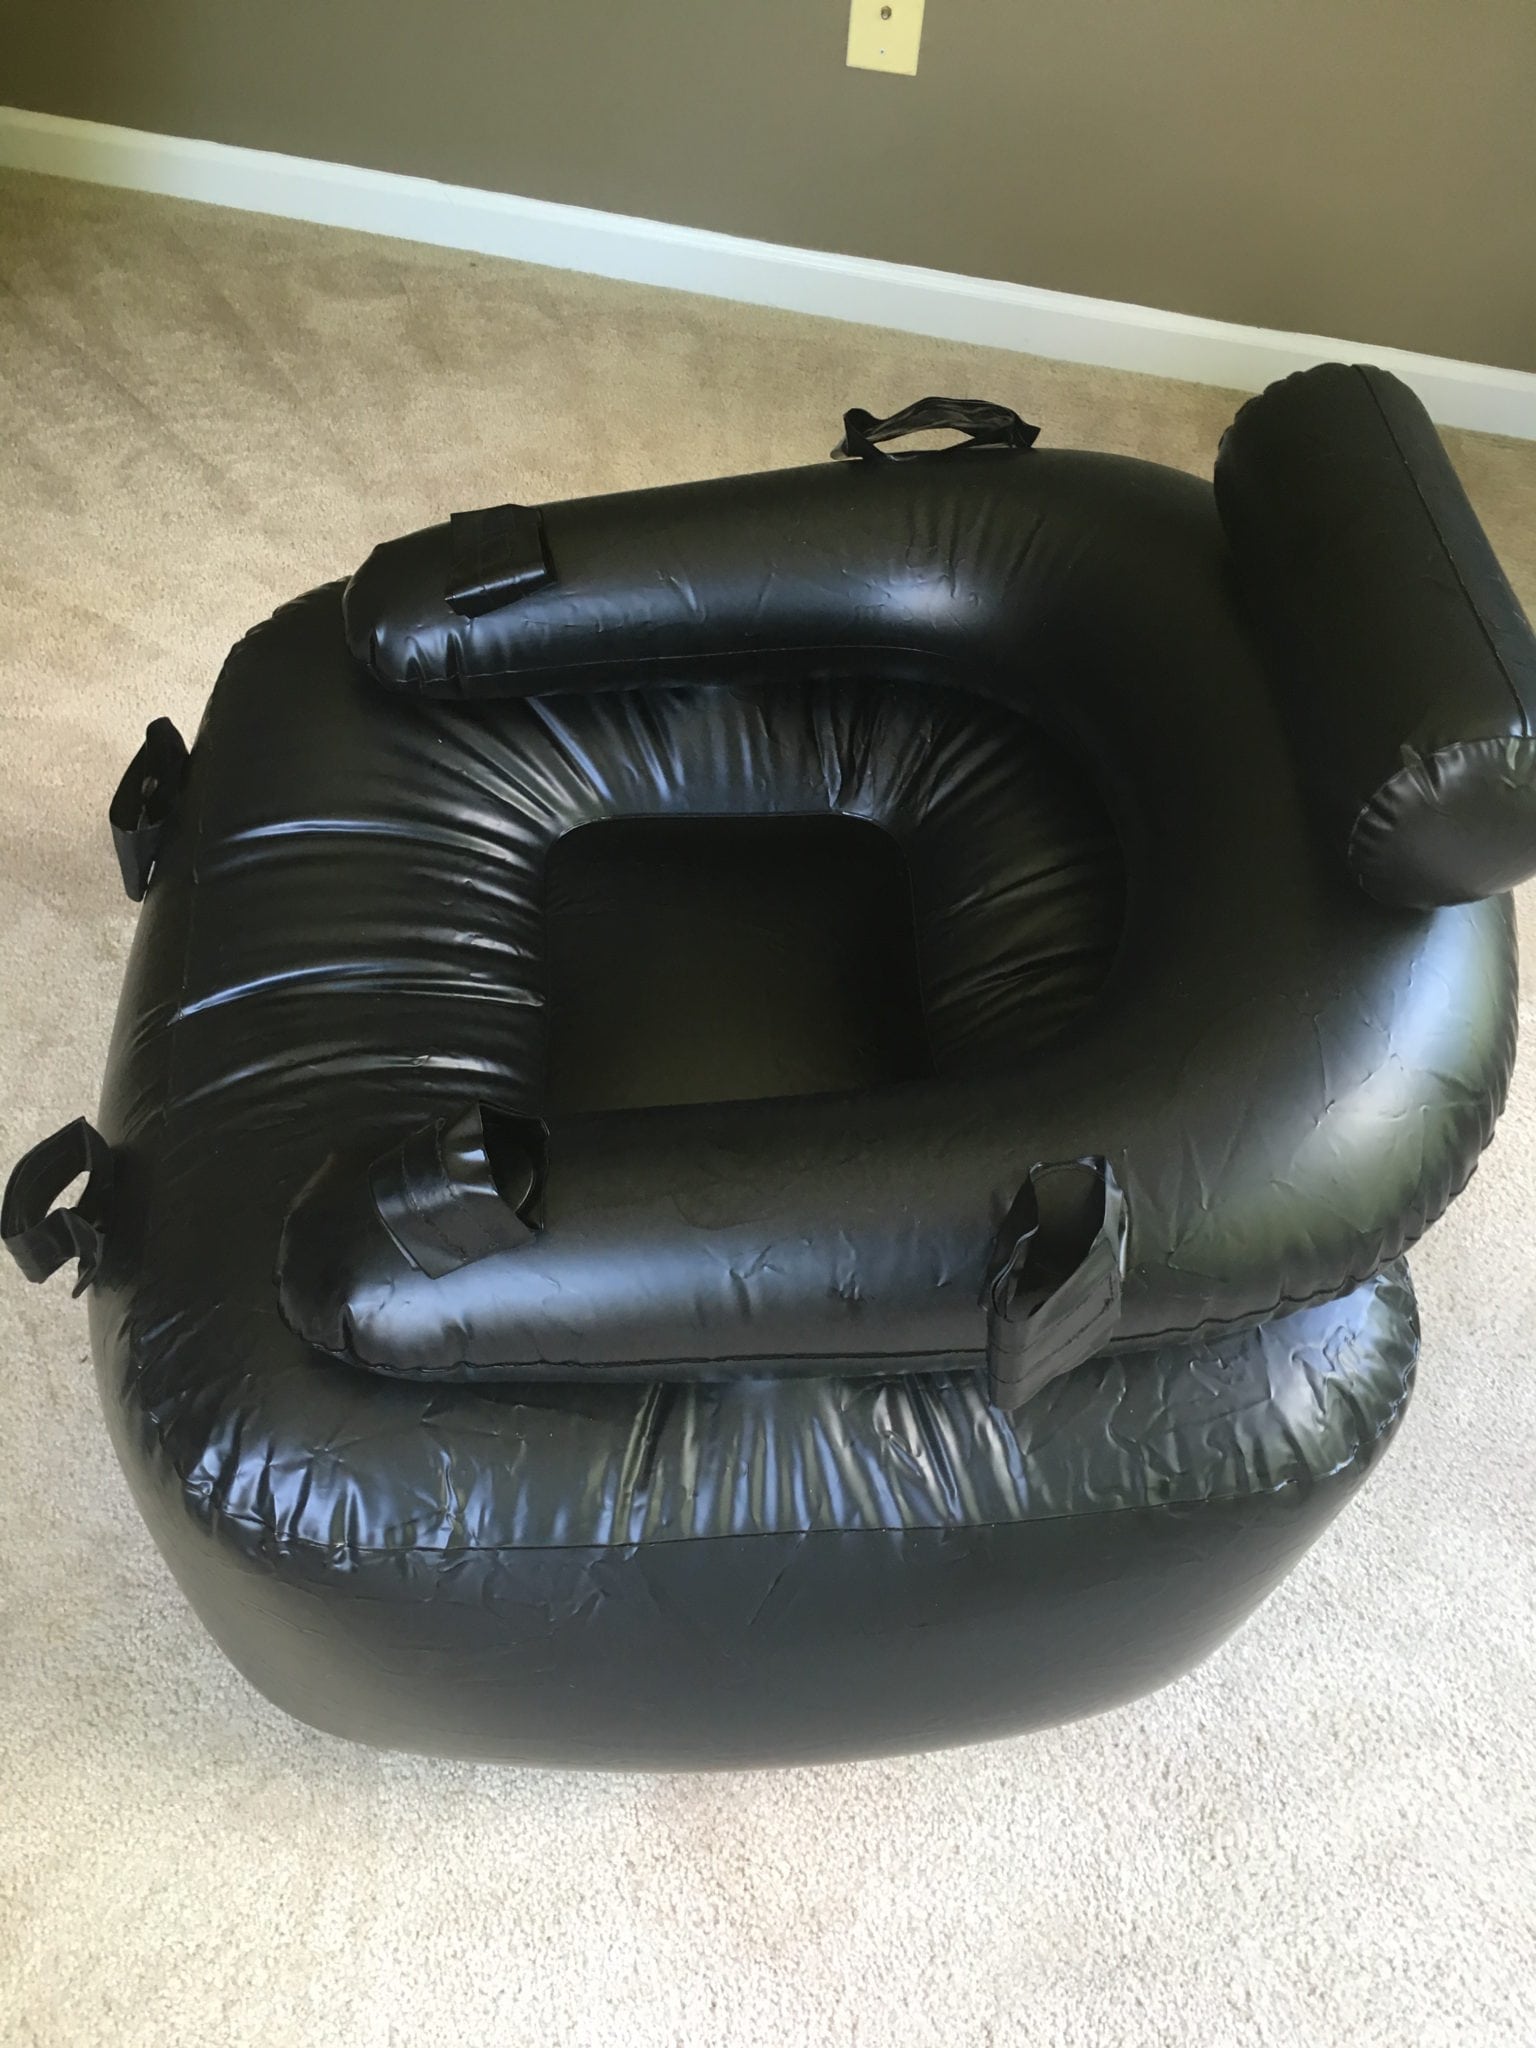 Fetish Fantasy Inflatable Bondage Chair Review